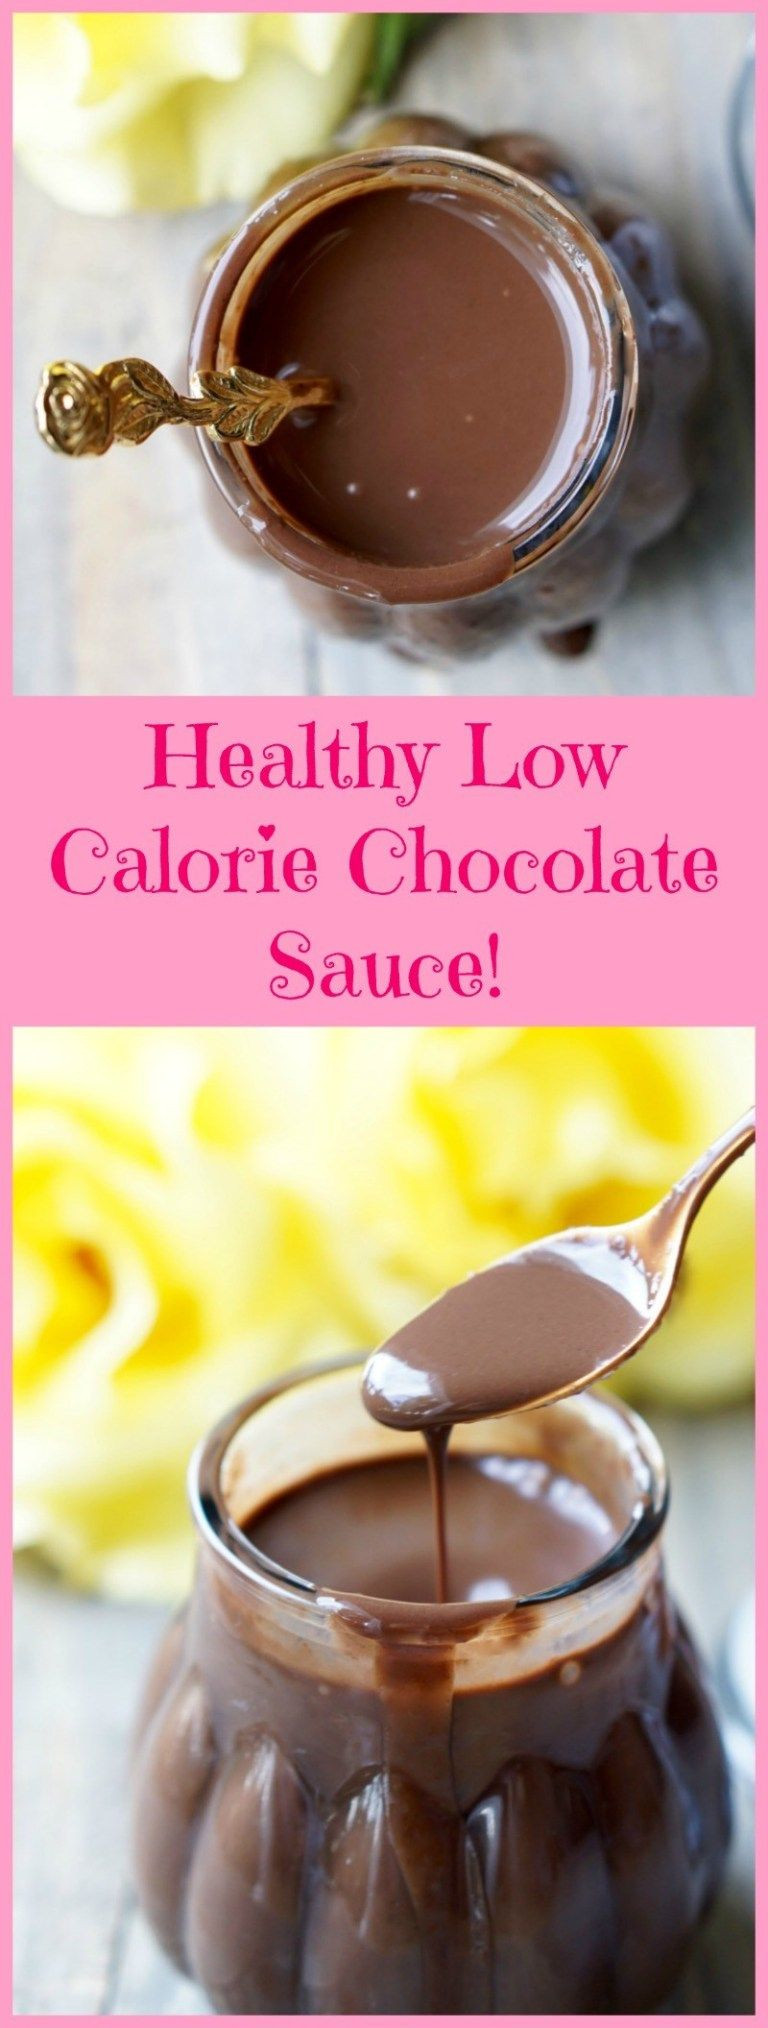 Low Calorie Paleo Desserts
 Low Calorie Chocolate Sauce Recipe